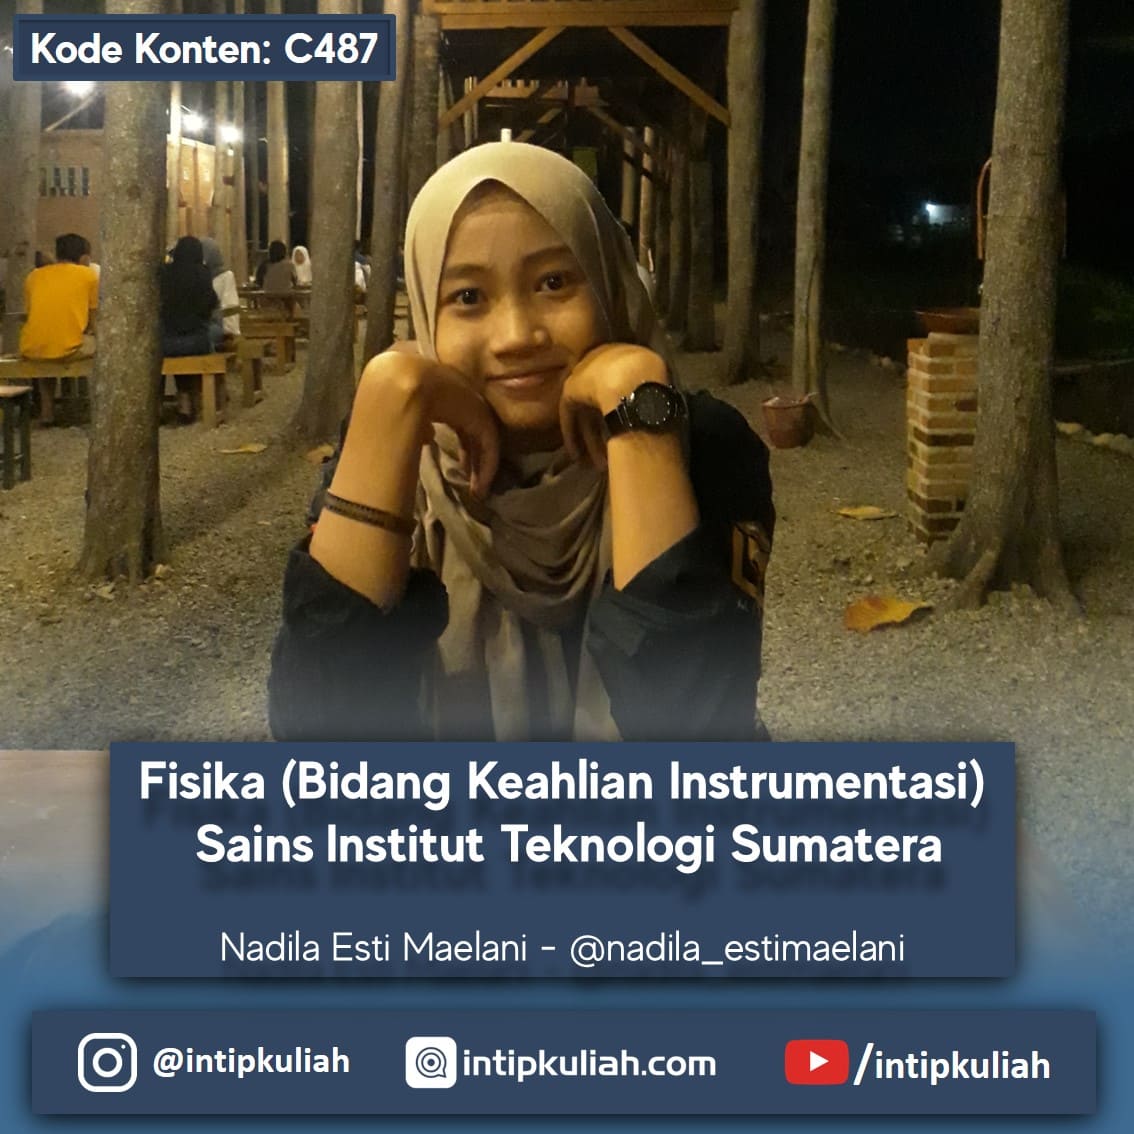 Fisika Institut Teknologi Sumatera (Nadila)